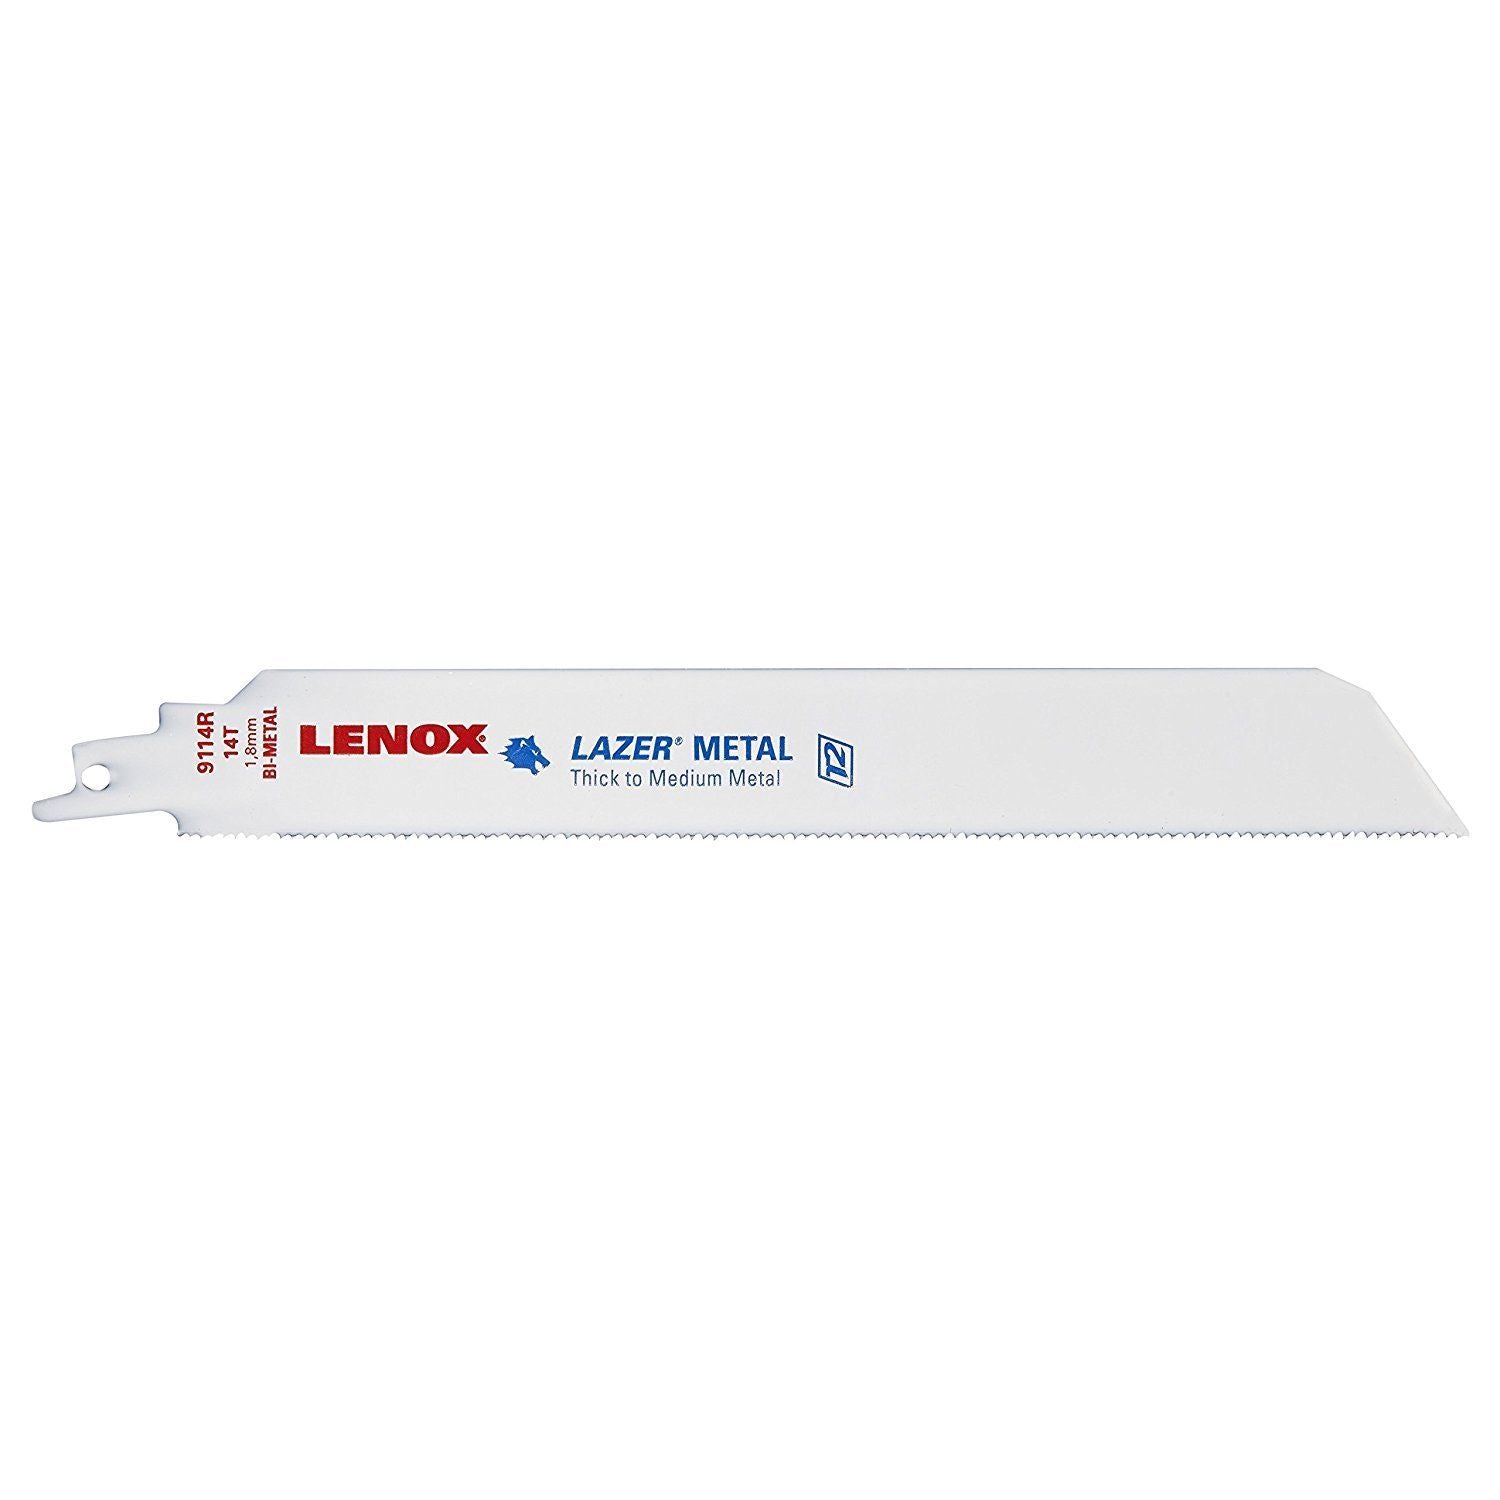 Lenox 201789114R 9" x 14 TPI Lazer Metal Reciprocating Saw Blades 5 Pack USA